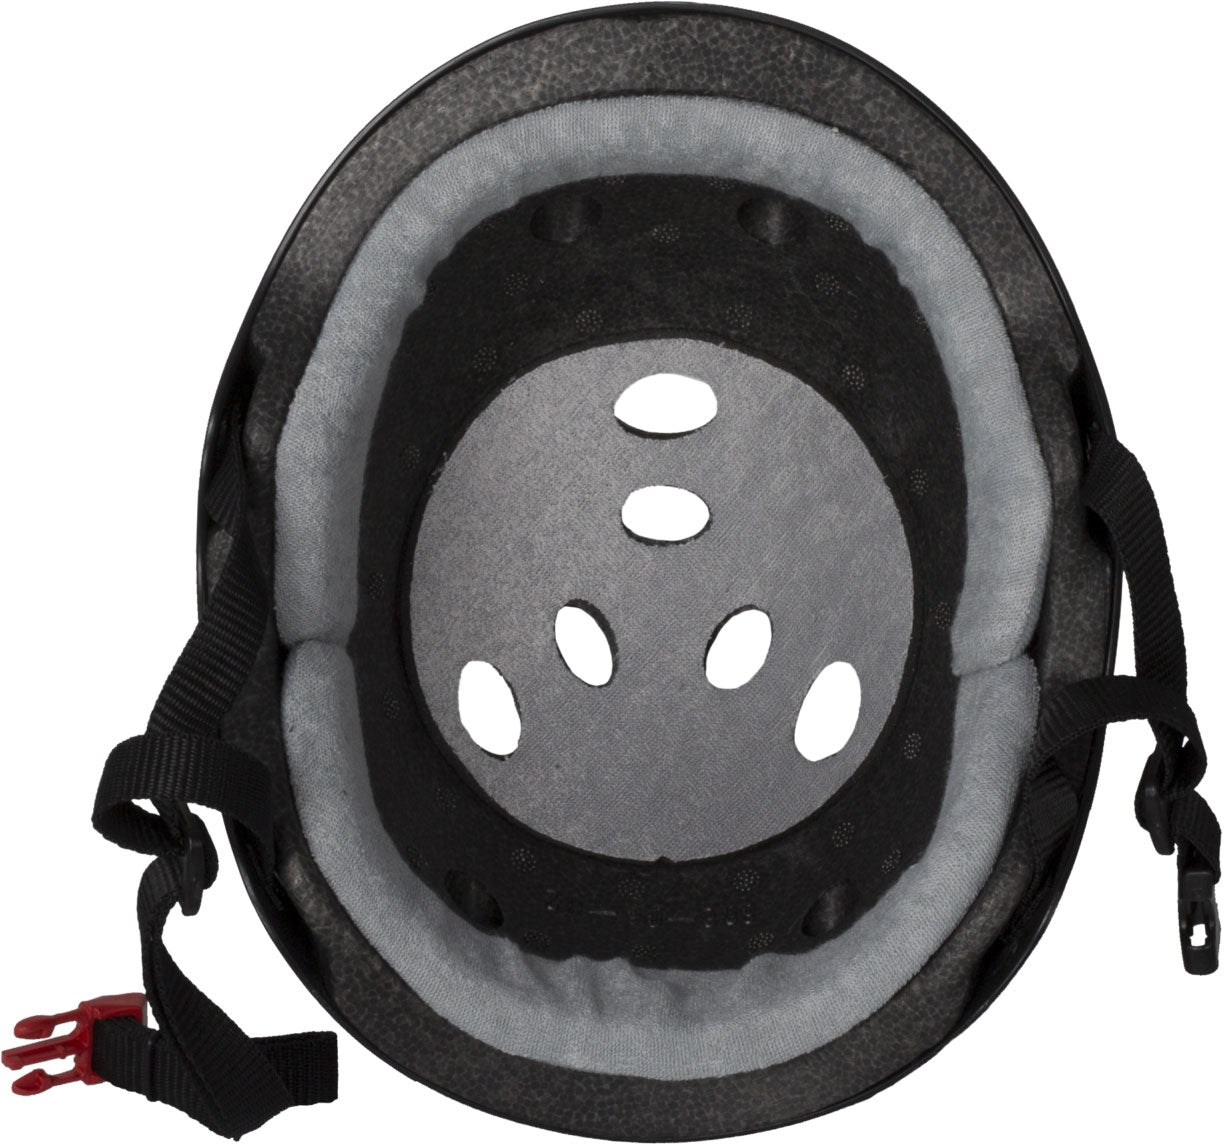 Triple 8 Certified Sweatsaver Skate Helmet - Carbon - Inner